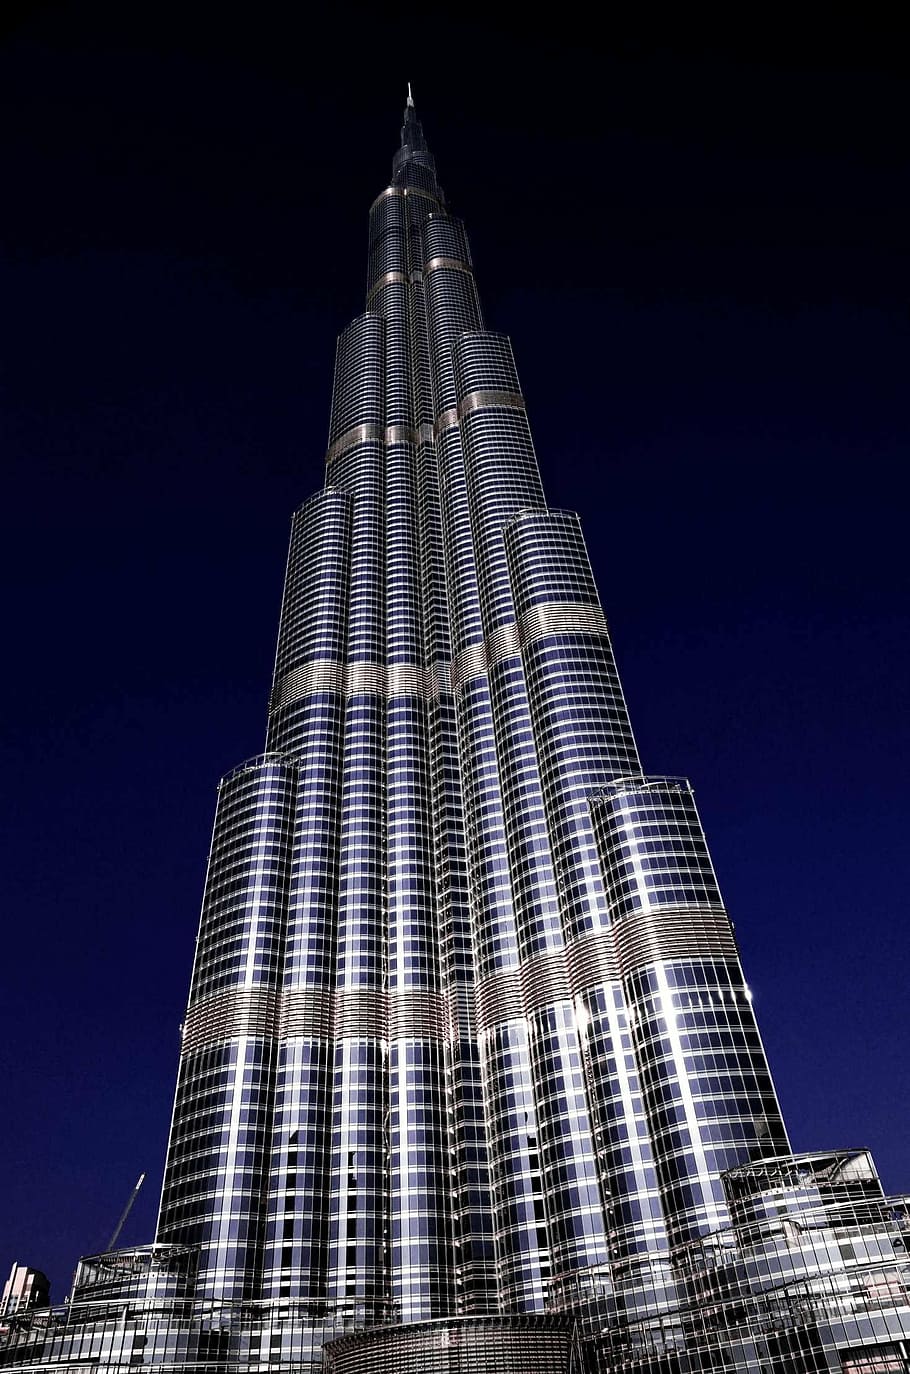 menara burj khalifa, burj khalifa, dubai, pencakar langit, arsitektur, struktur gedung, modern, gedung perkantoran, menara, eksterior bangunan